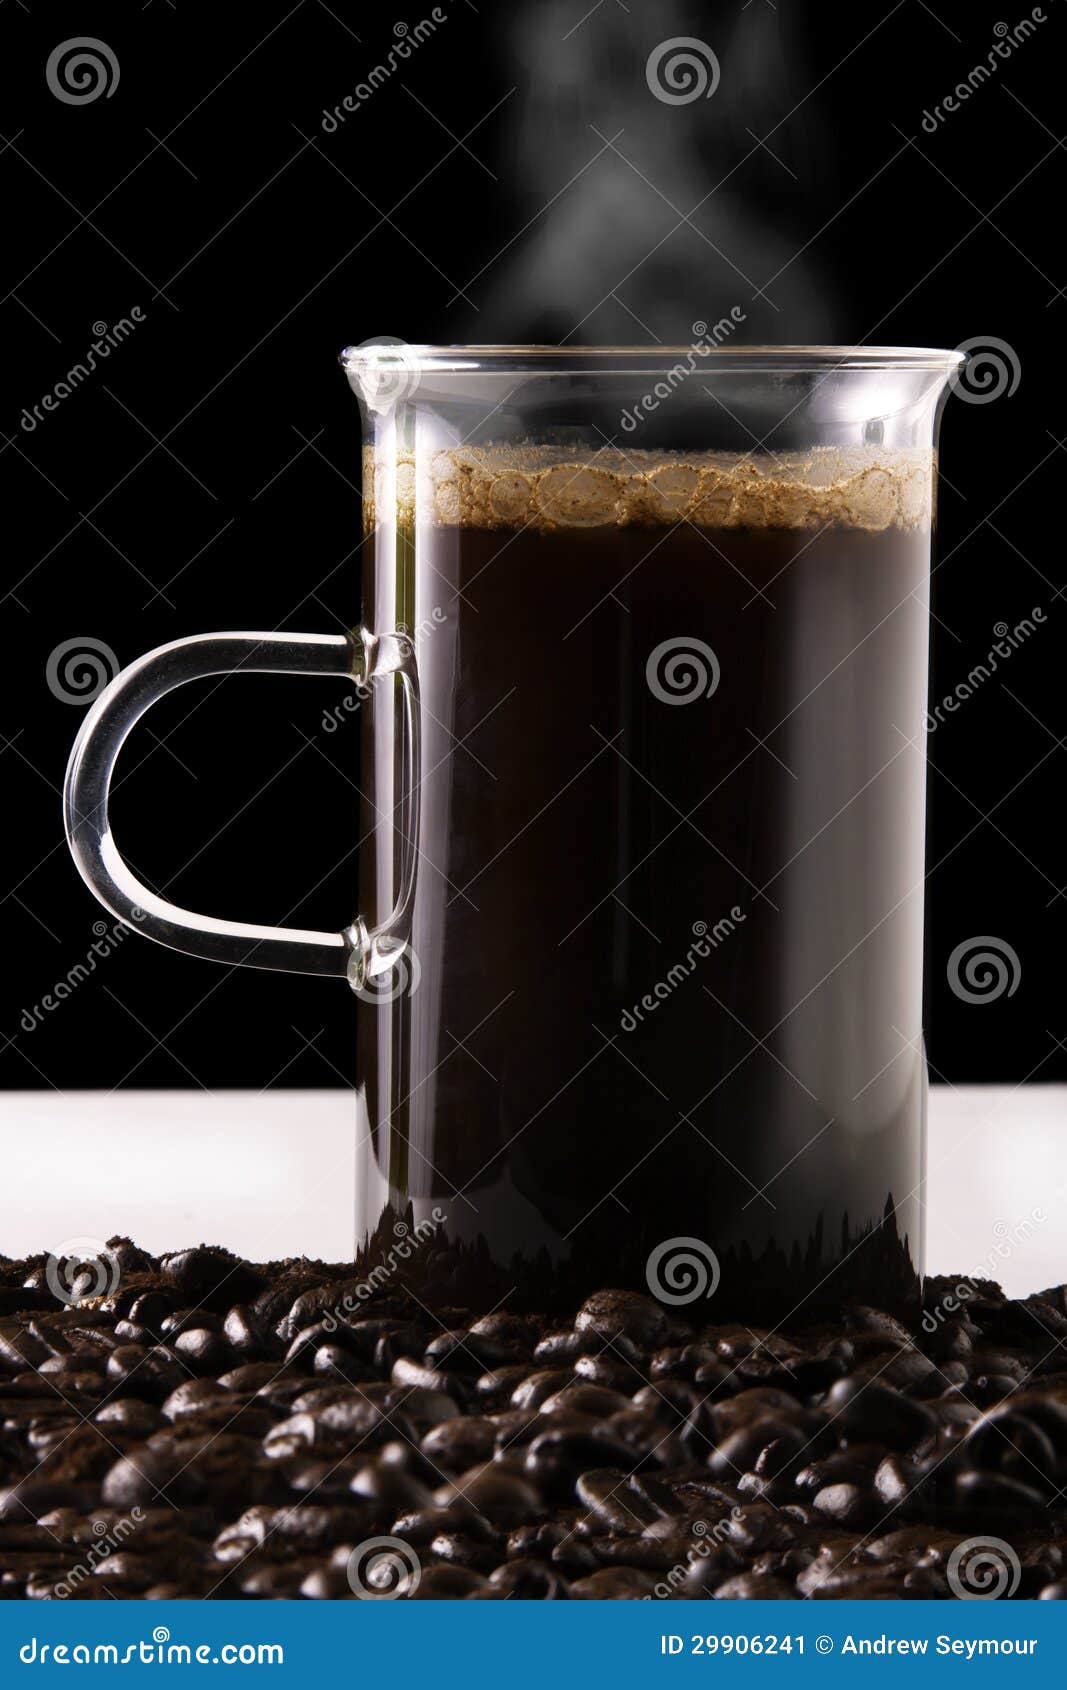 https://thumbs.dreamstime.com/z/studio-images-coffee-cup-beans-29906241.jpg